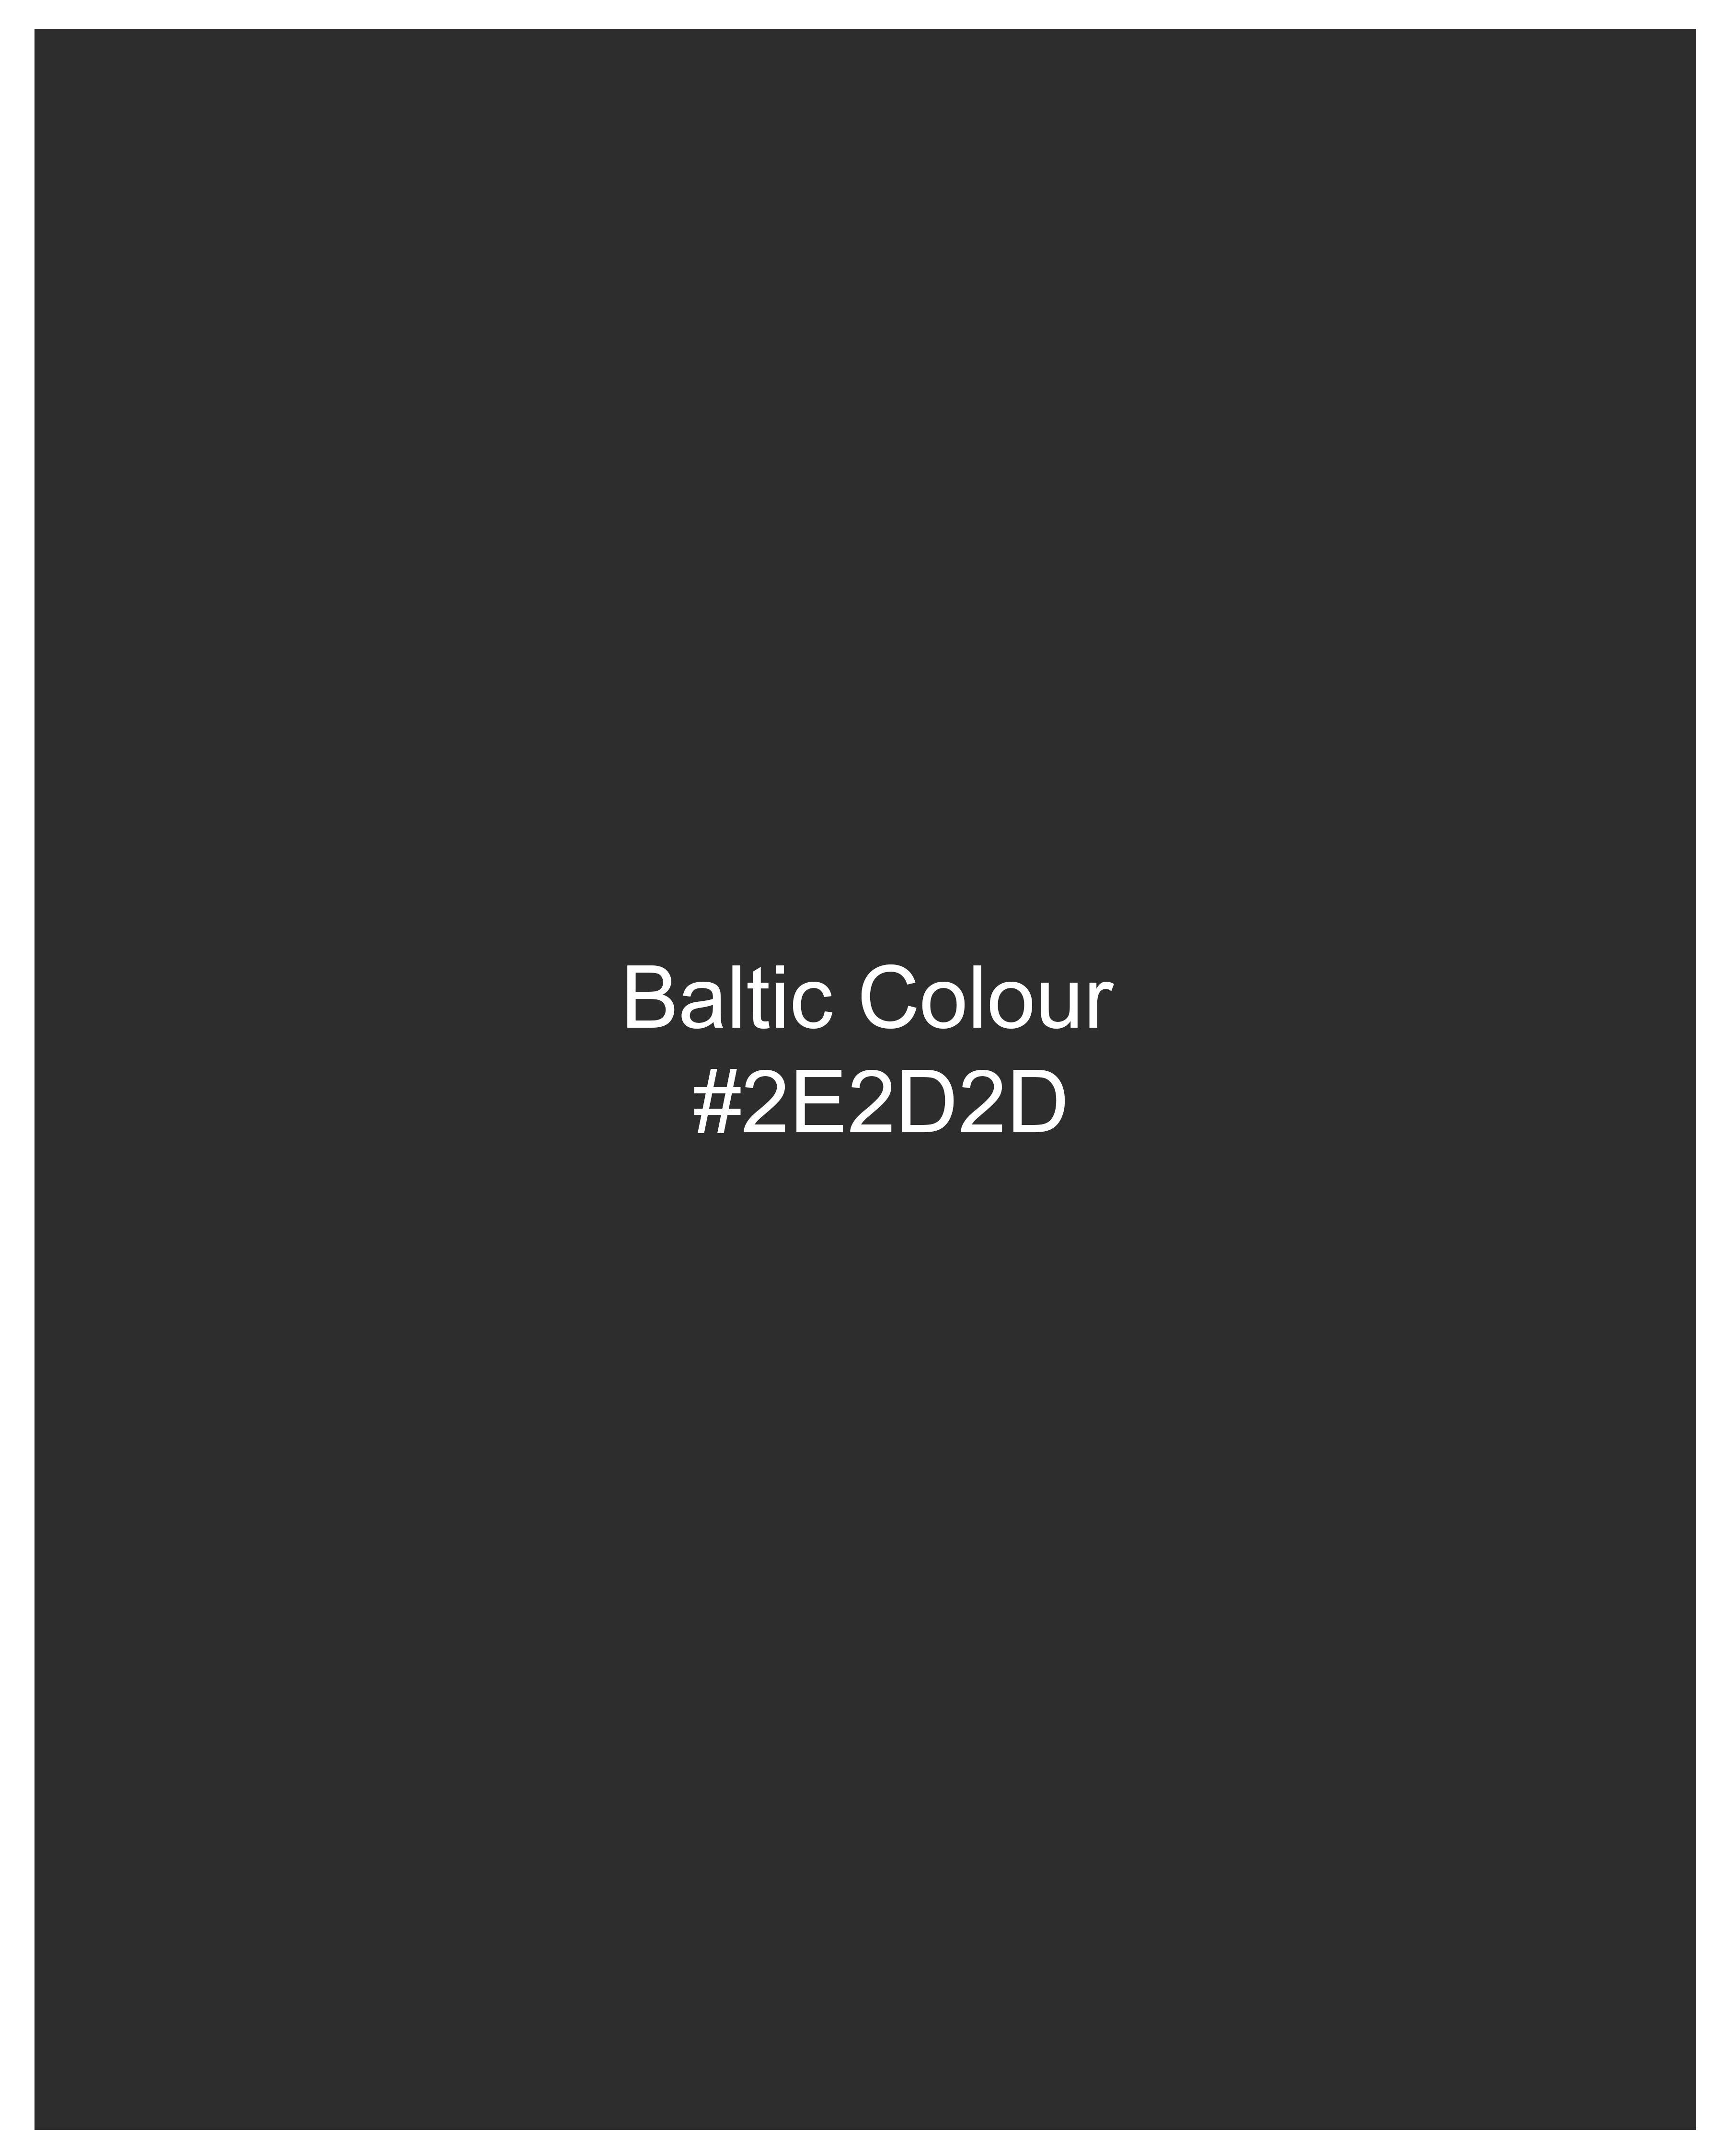 Baltic Black Windowpane Single Breasted Suit ST2311-SB-36, ST2311-SB-38, ST2311-SB-40, ST2311-SB-42, ST2311-SB-44, ST2311-SB-46, ST2311-SB-48, ST2311-SB-50, ST2311-SB-52, ST2311-SB-54, ST2311-SB-56, ST2311-SB-58, ST2311-SB-60